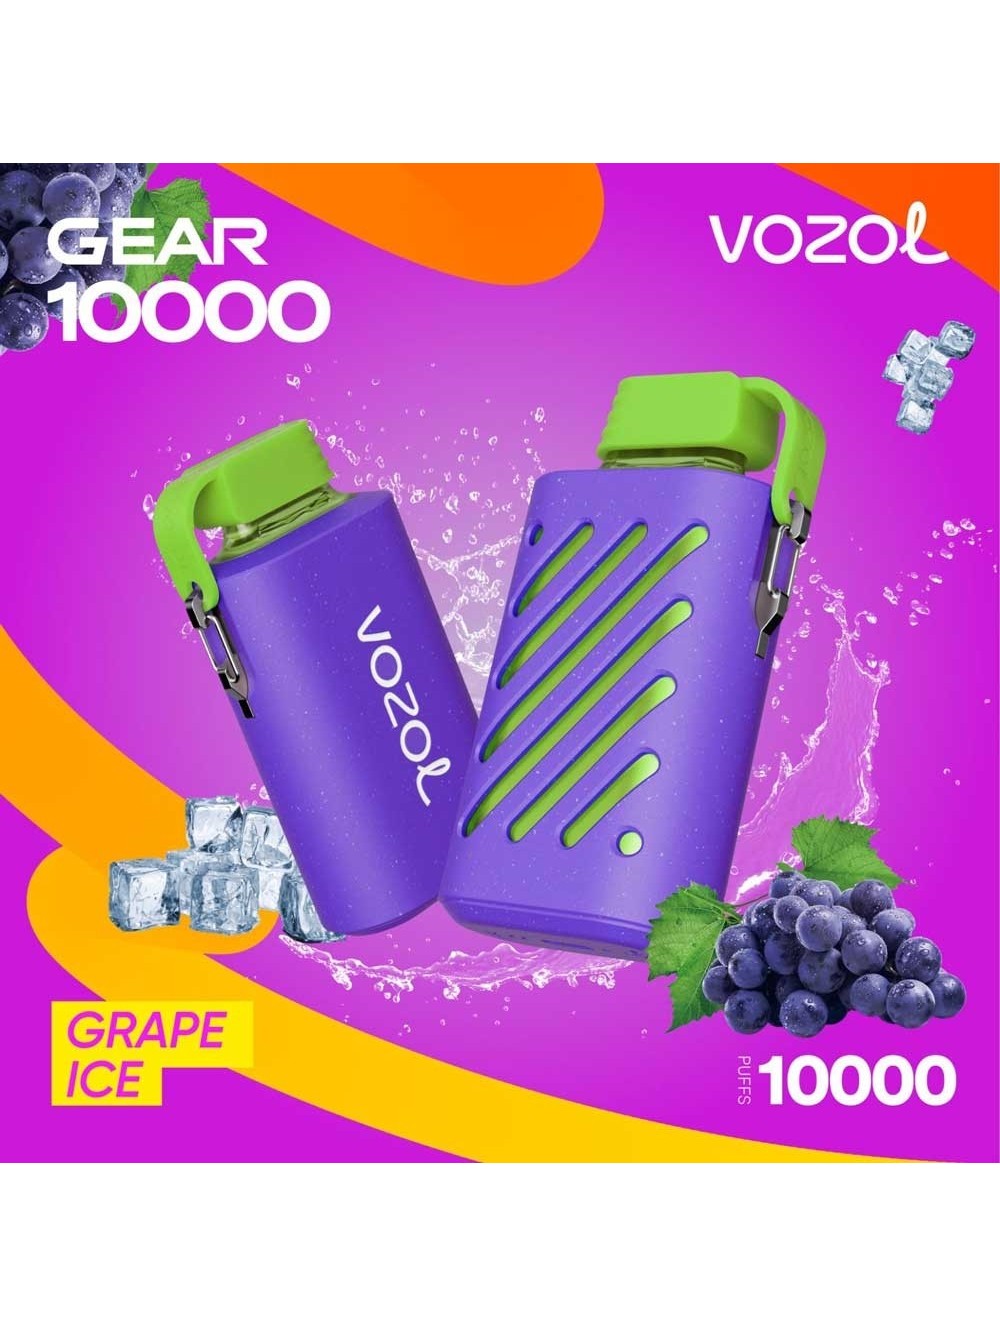 Vozol Gear 10000 Grape Ice